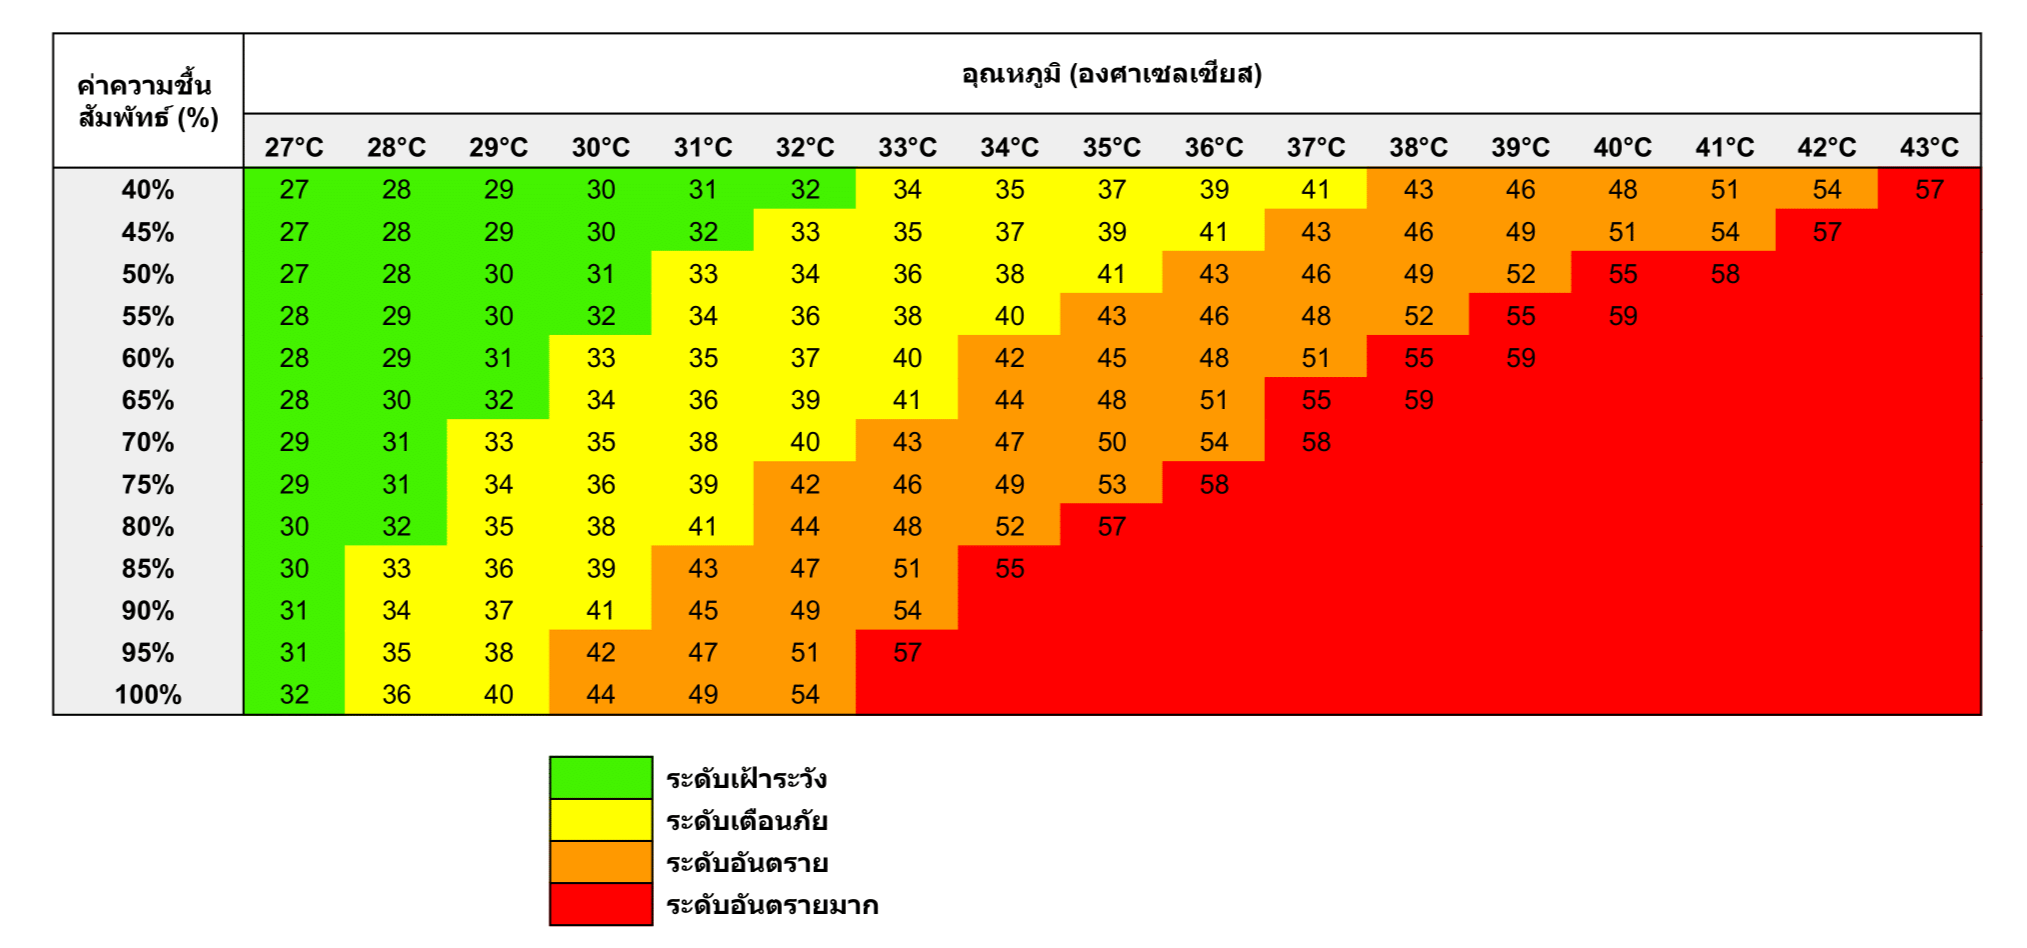 Heat index table